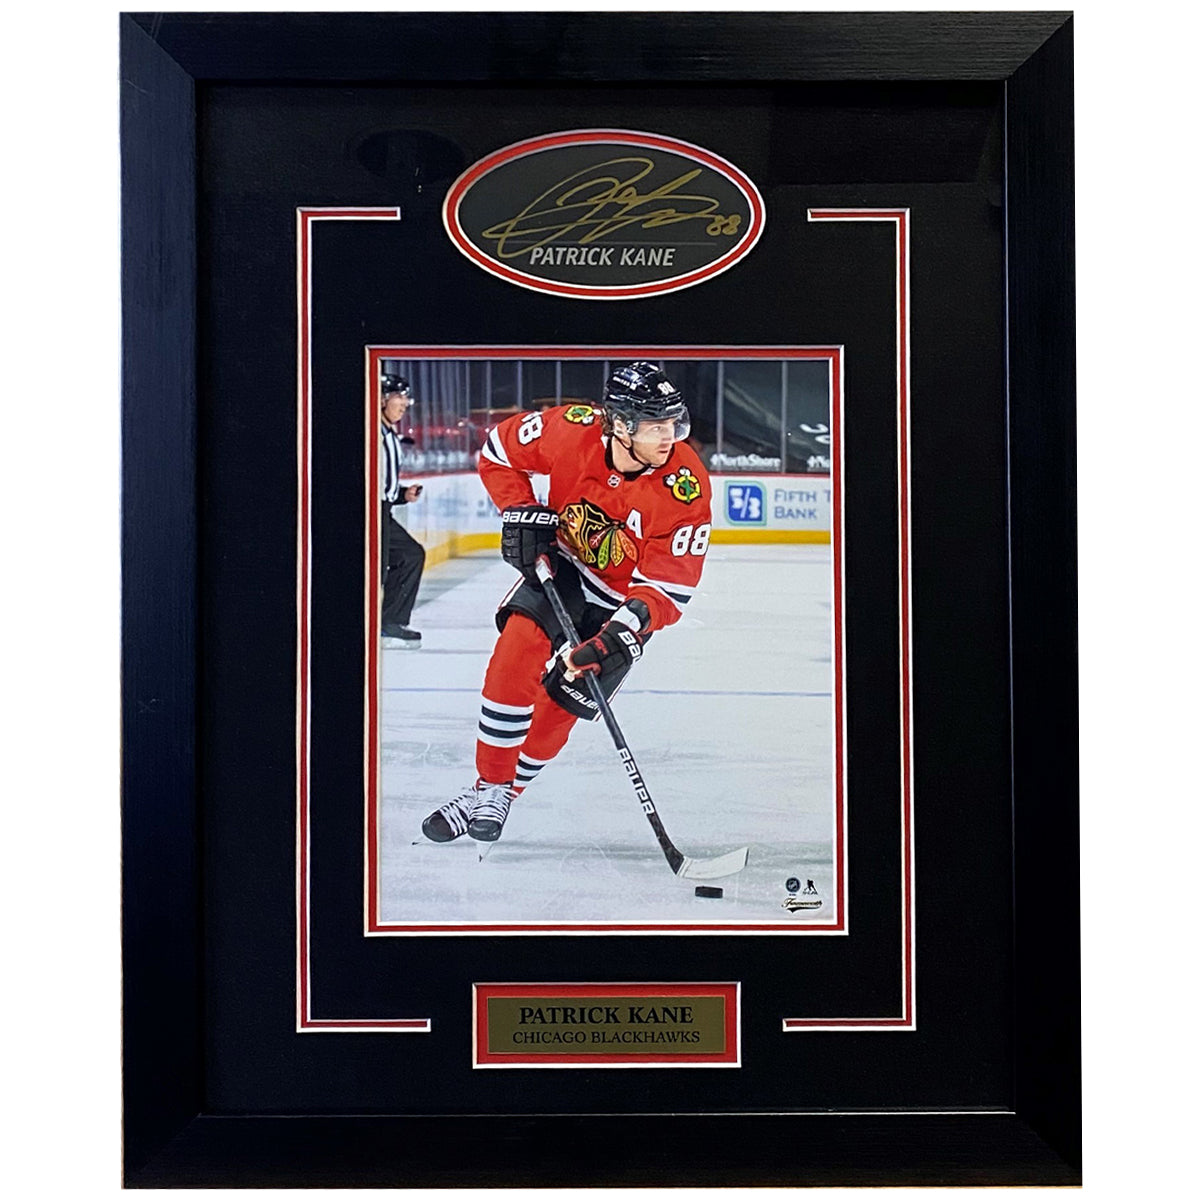 Sold at Auction: Autographed Patrick Kane Chicago Blackhawks NHL